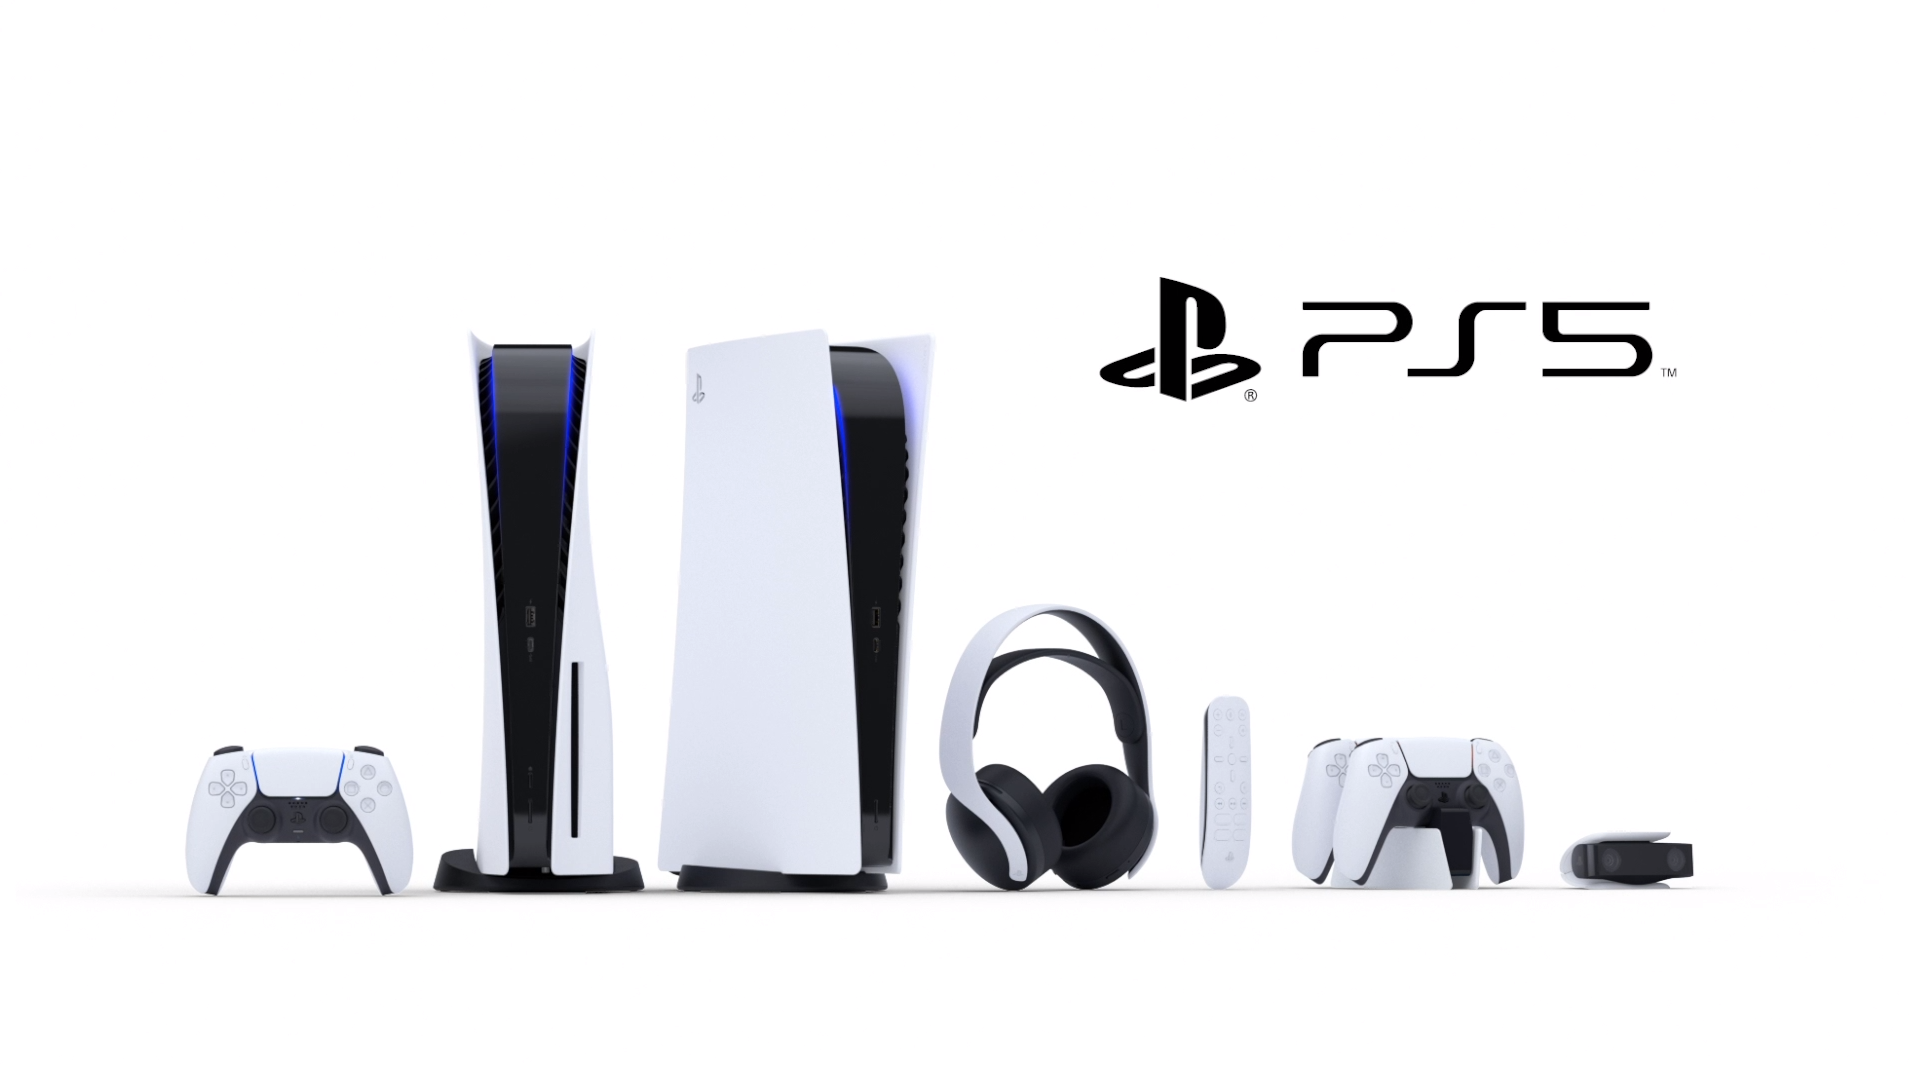 Sony เผยโฉม PS5 มีรุ่น Digital และรุ่น Bluray พร้อม 11 ตัวอย่างเกมใหม่สุดอลังการ